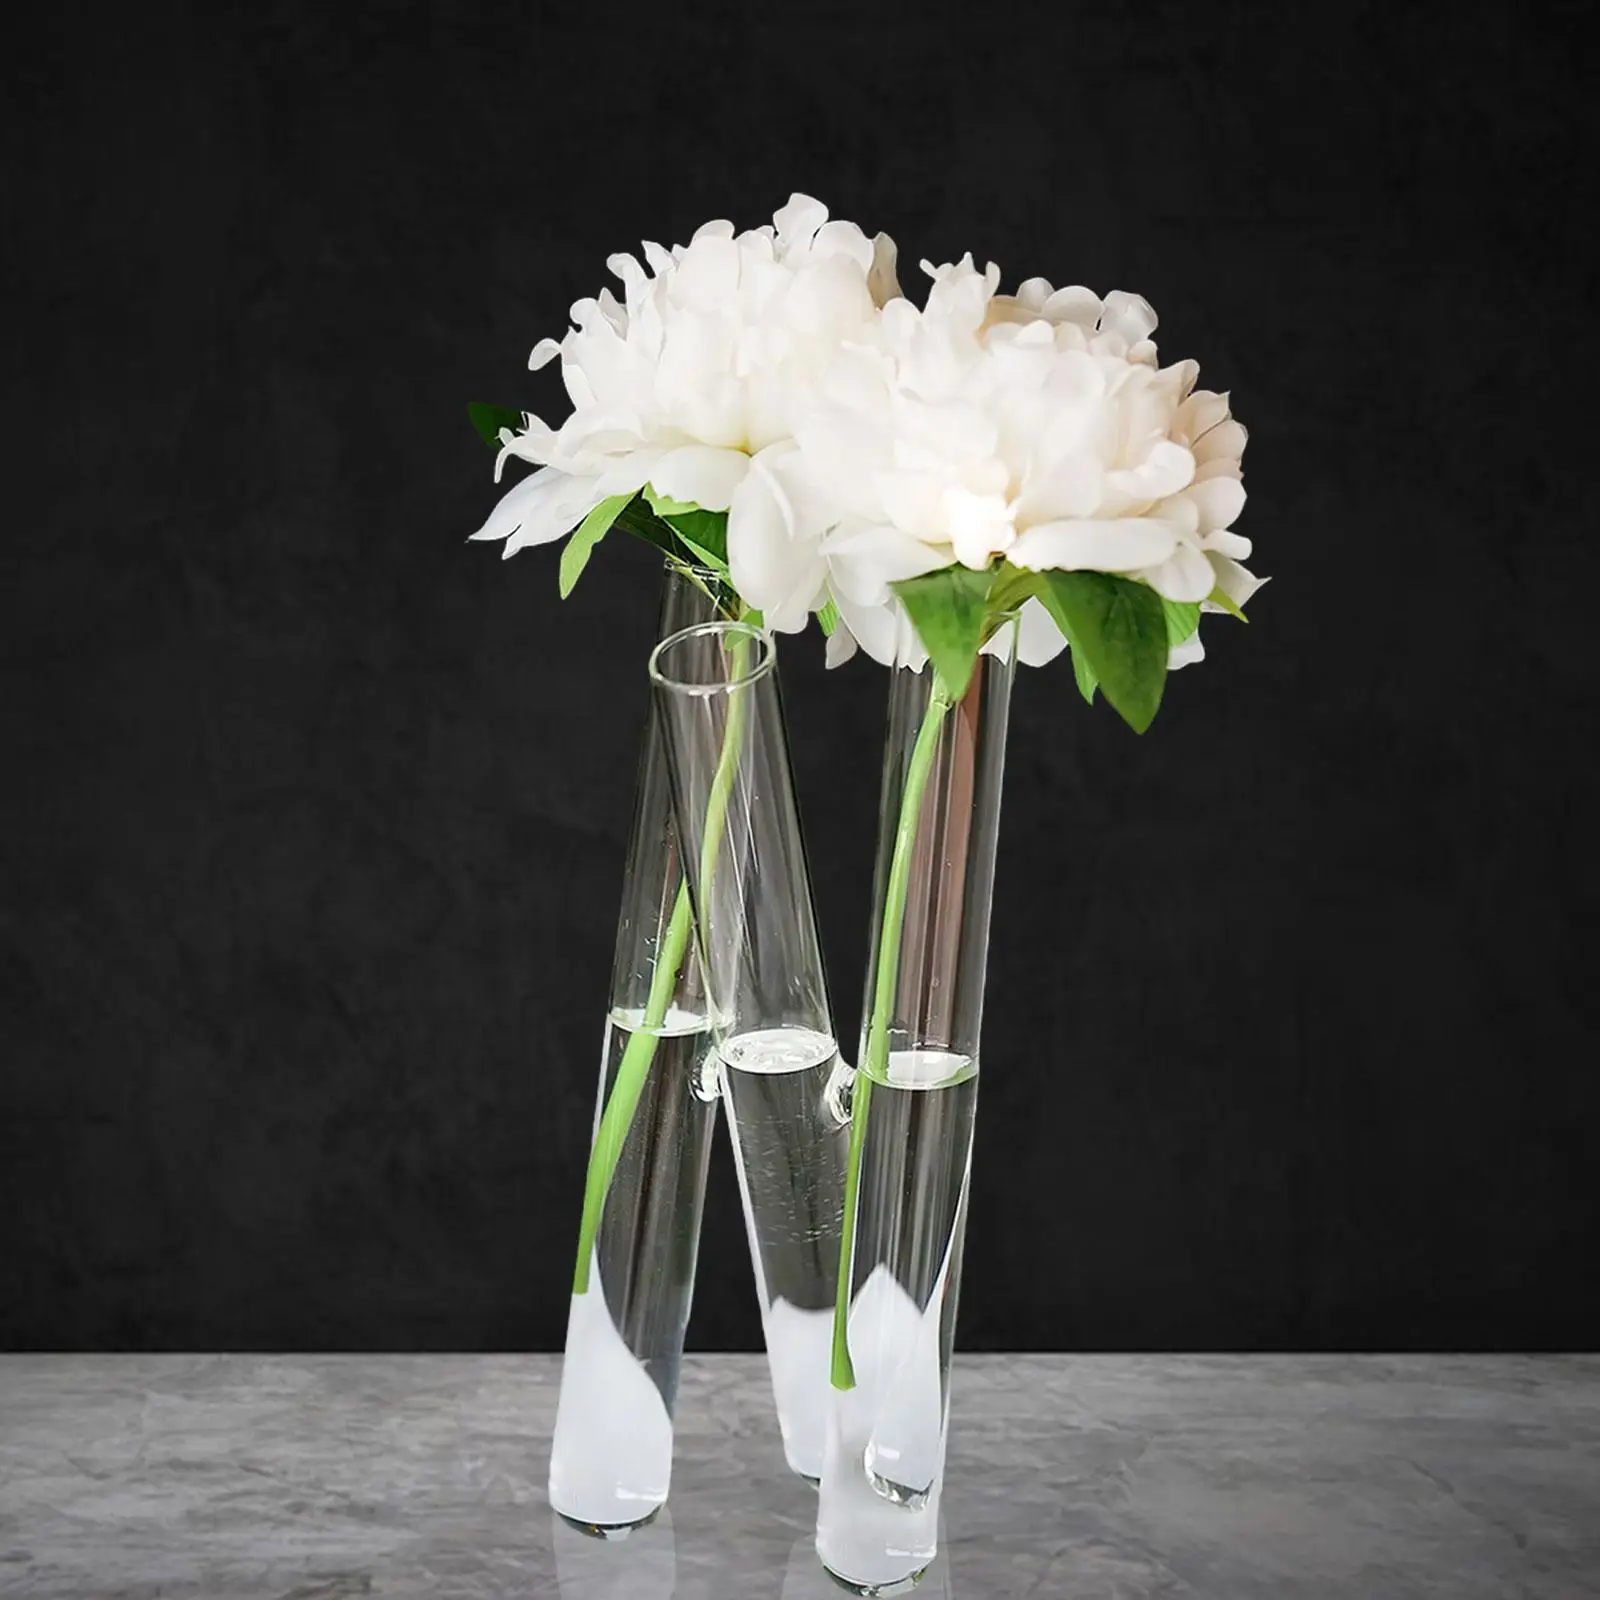 Test Tube Vase with 3 Test Tubes Propagation Decoration Hydroponic Plant Holder for Interior Living Room Desktop Kitchen Wedding